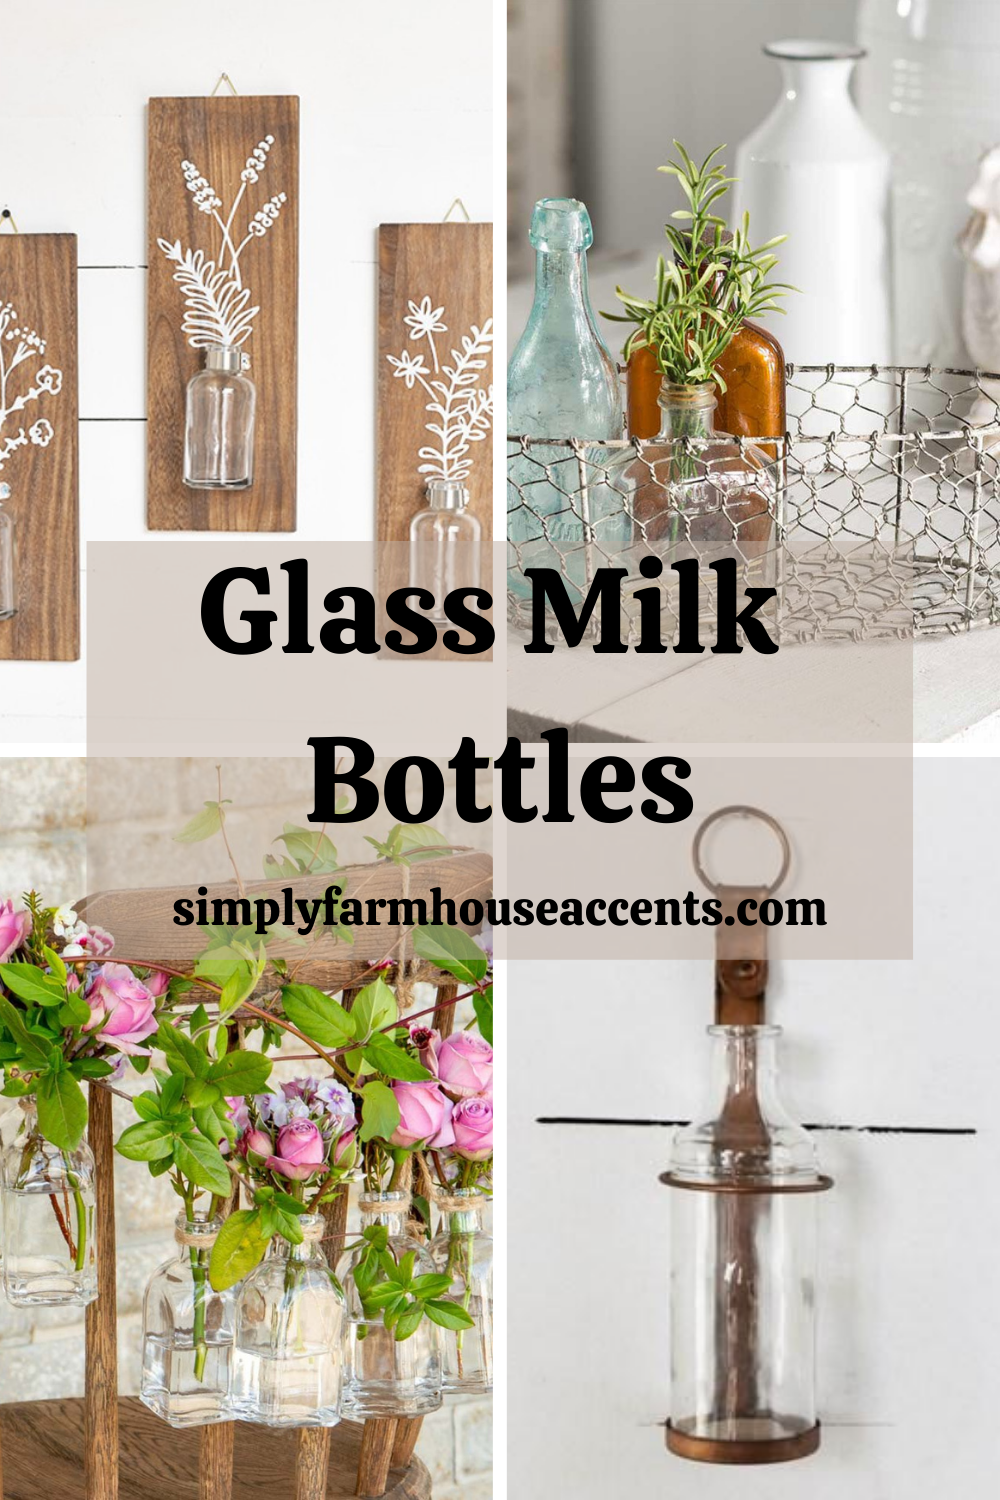 5 ideas for decorating glass bottles 